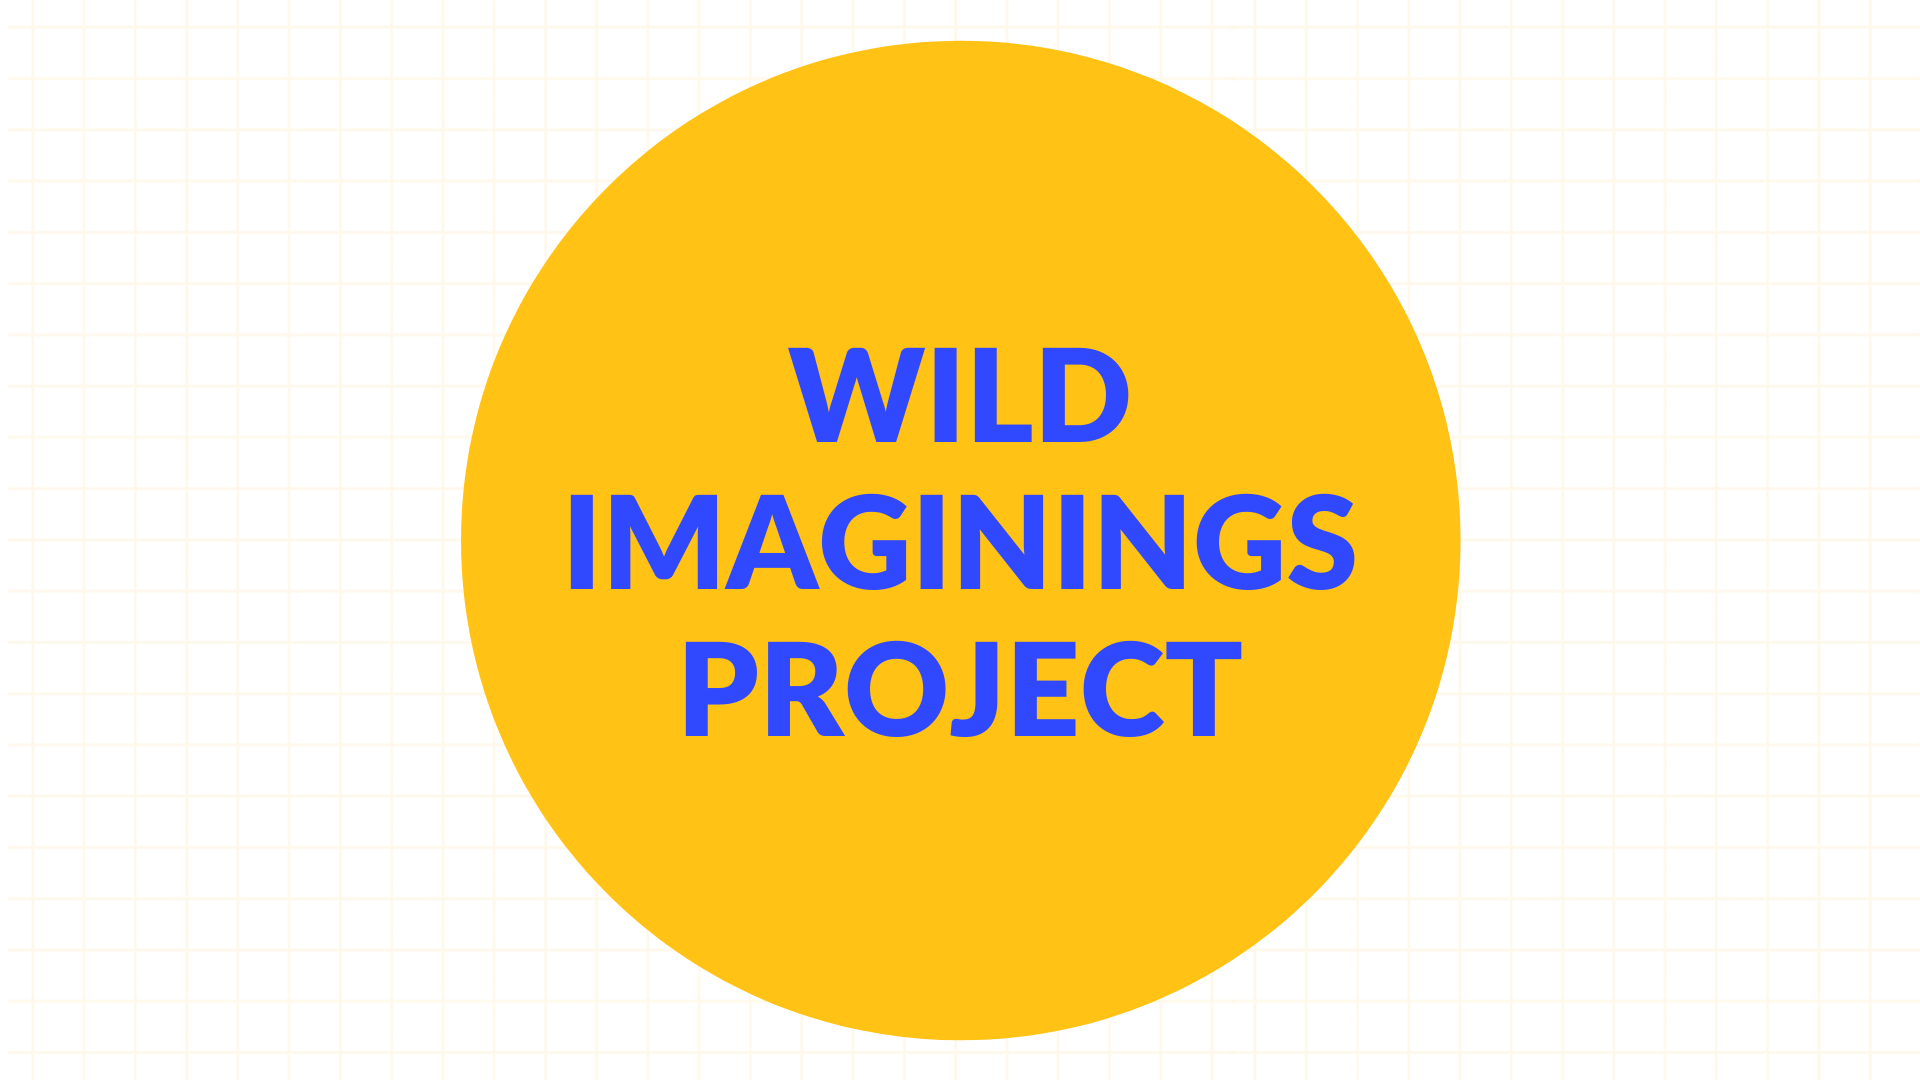 Wild Imaginings Project